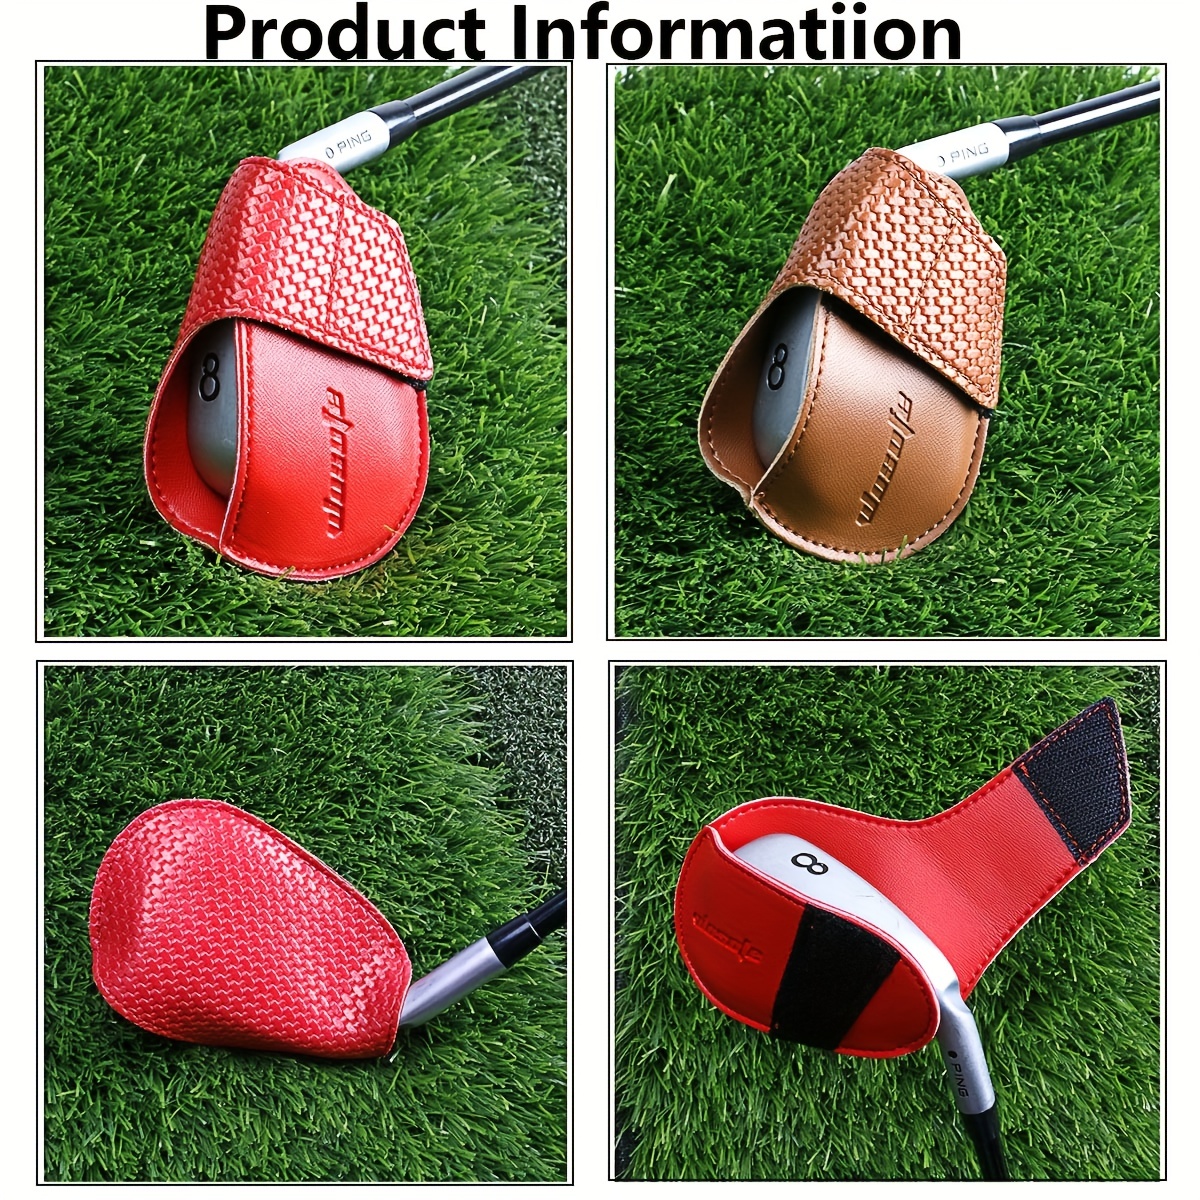 Pu Leather Golf Iron Club Cover, Golf Accessories, Golf Club Cover